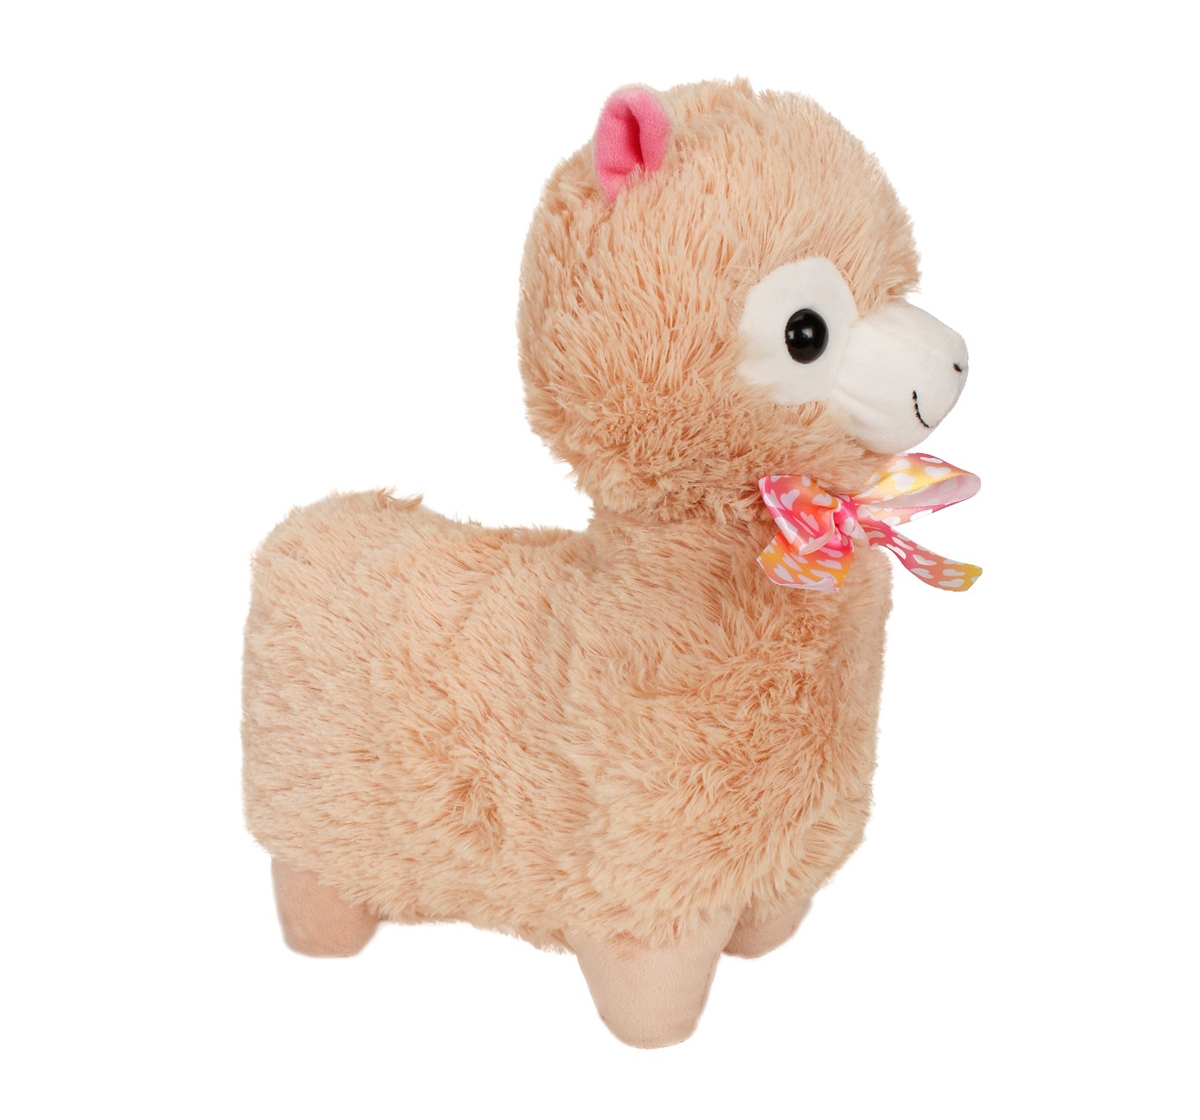 Fuzzbuzz | Fuzzbuzz Llama Stuffed Plush Toy - Brown - 33Cm Quirky Soft Toys for Kids age 0M+ - 33 Cm (Brown)